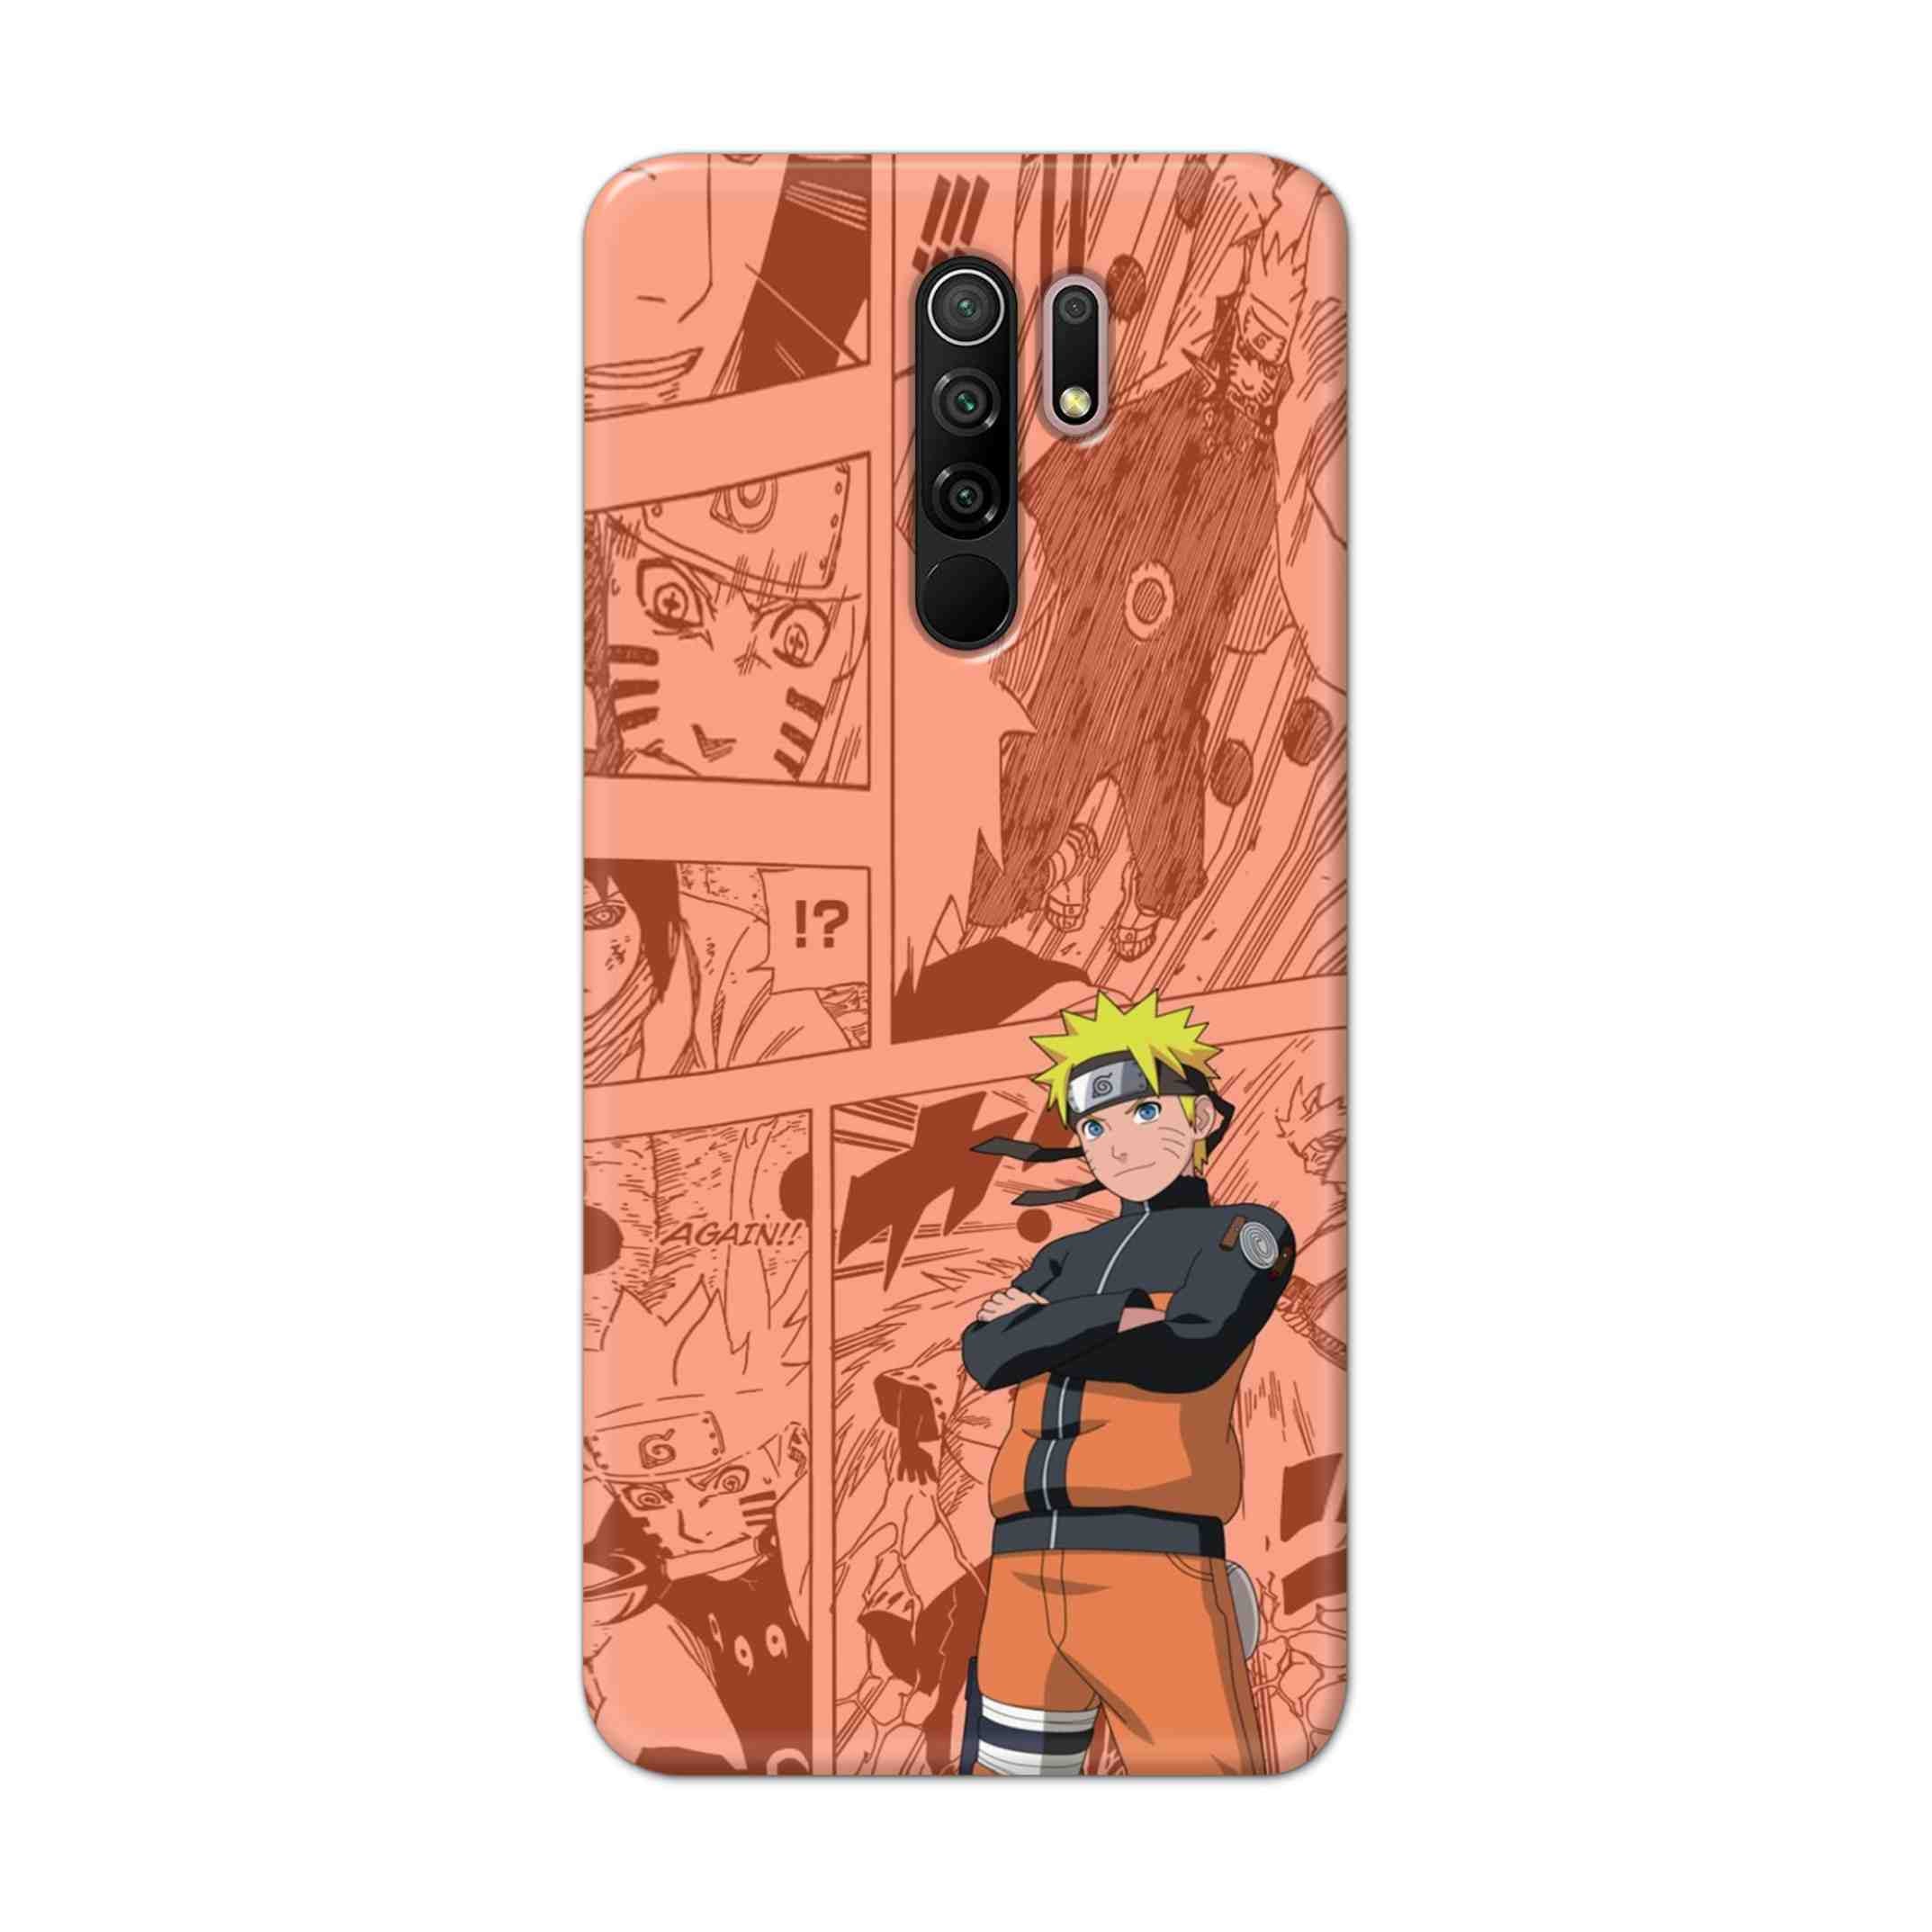 Buy Naruto Hard Back Mobile Phone Case Cover For Xiaomi Redmi 9 Prime Online